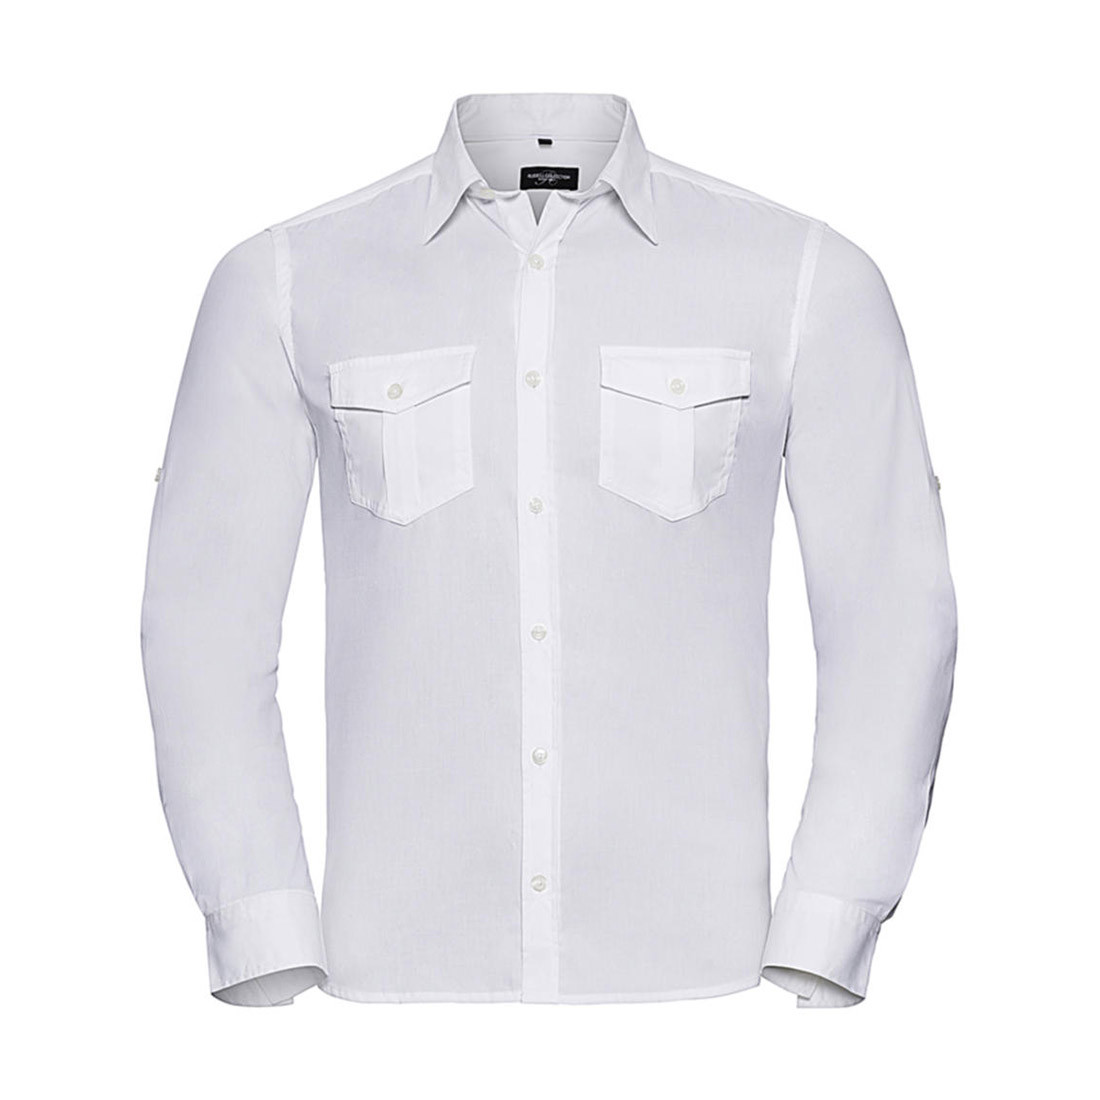 Roll Sleeve Shirt Long Sleeve - Les vêtements de protection